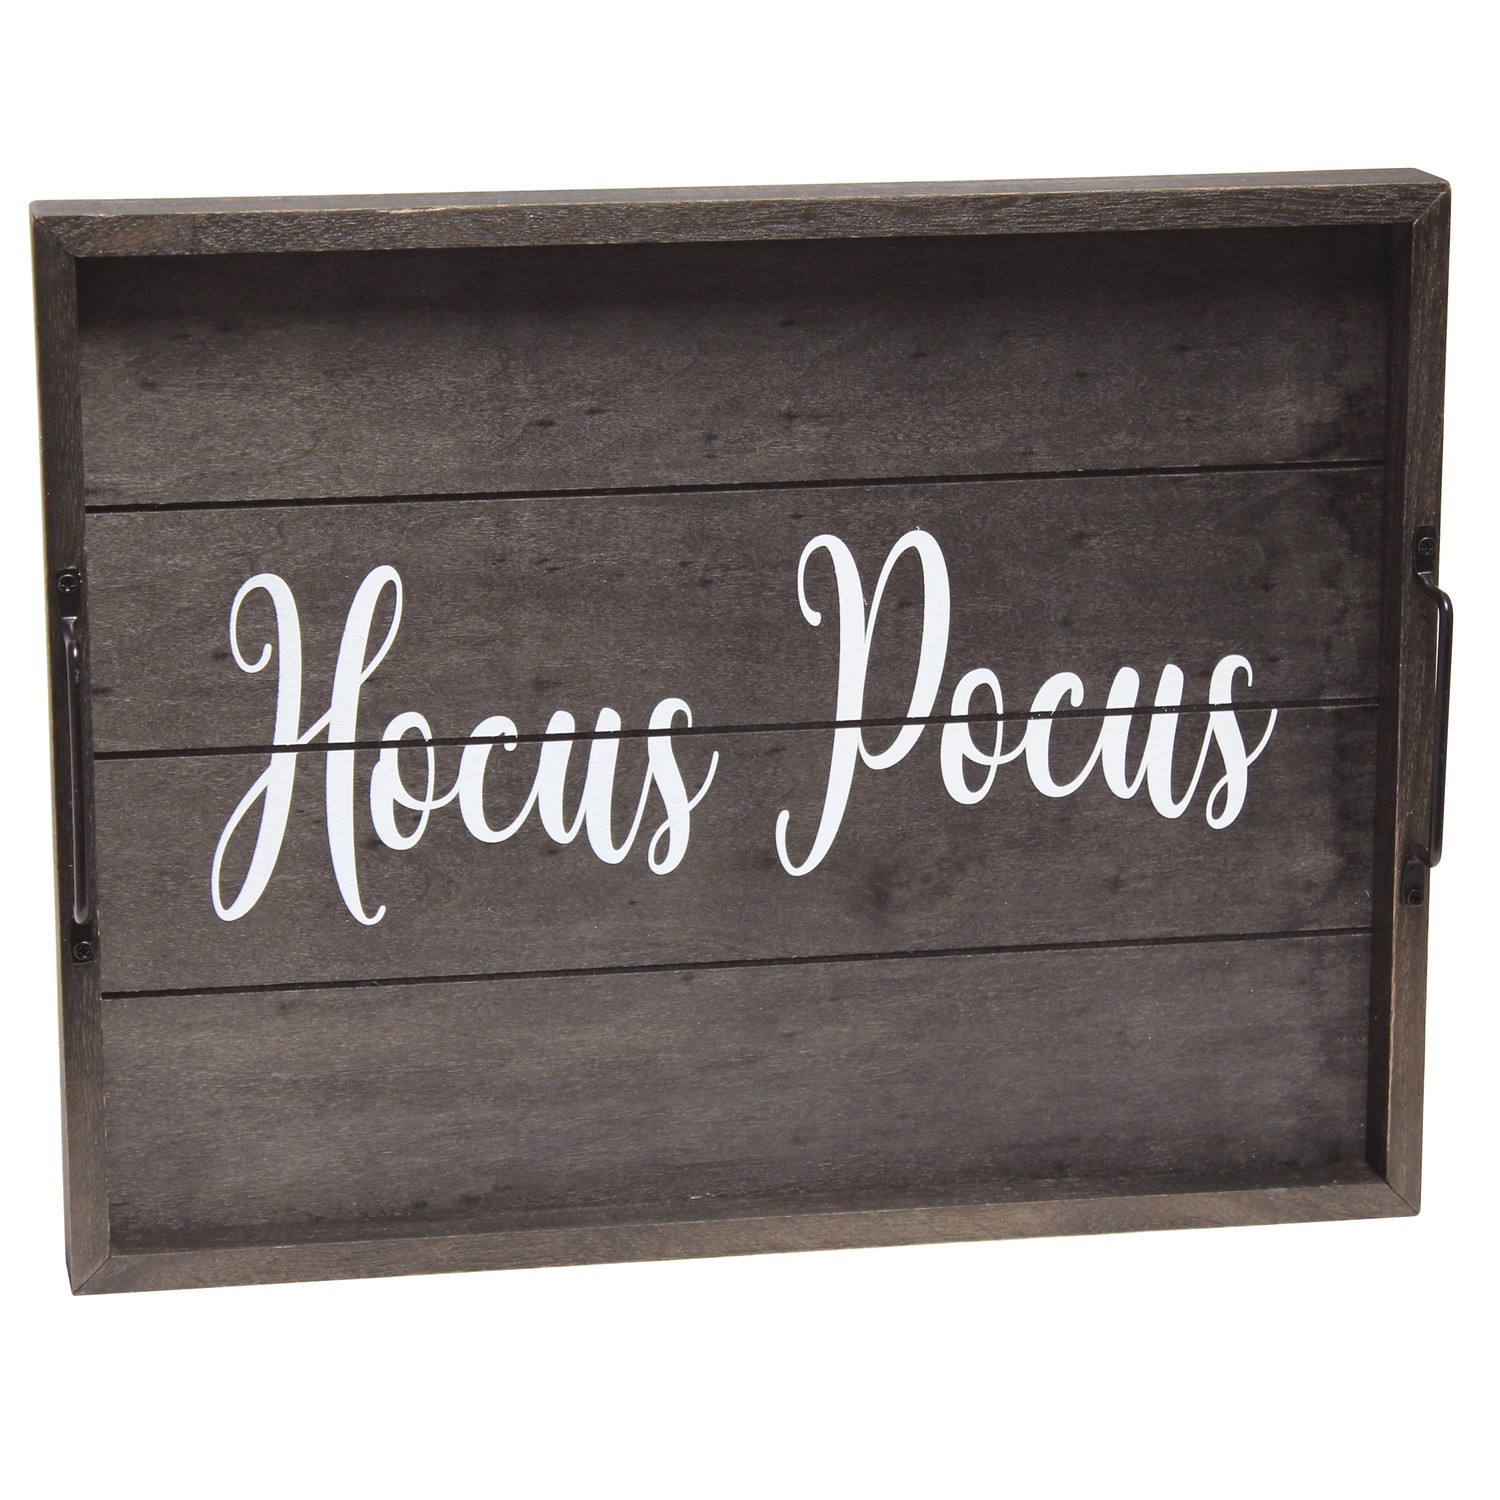 Elegant Designs Decorative Wood Serving Tray w/ Handles, 15.50" x 12", "Hocus Pocus"